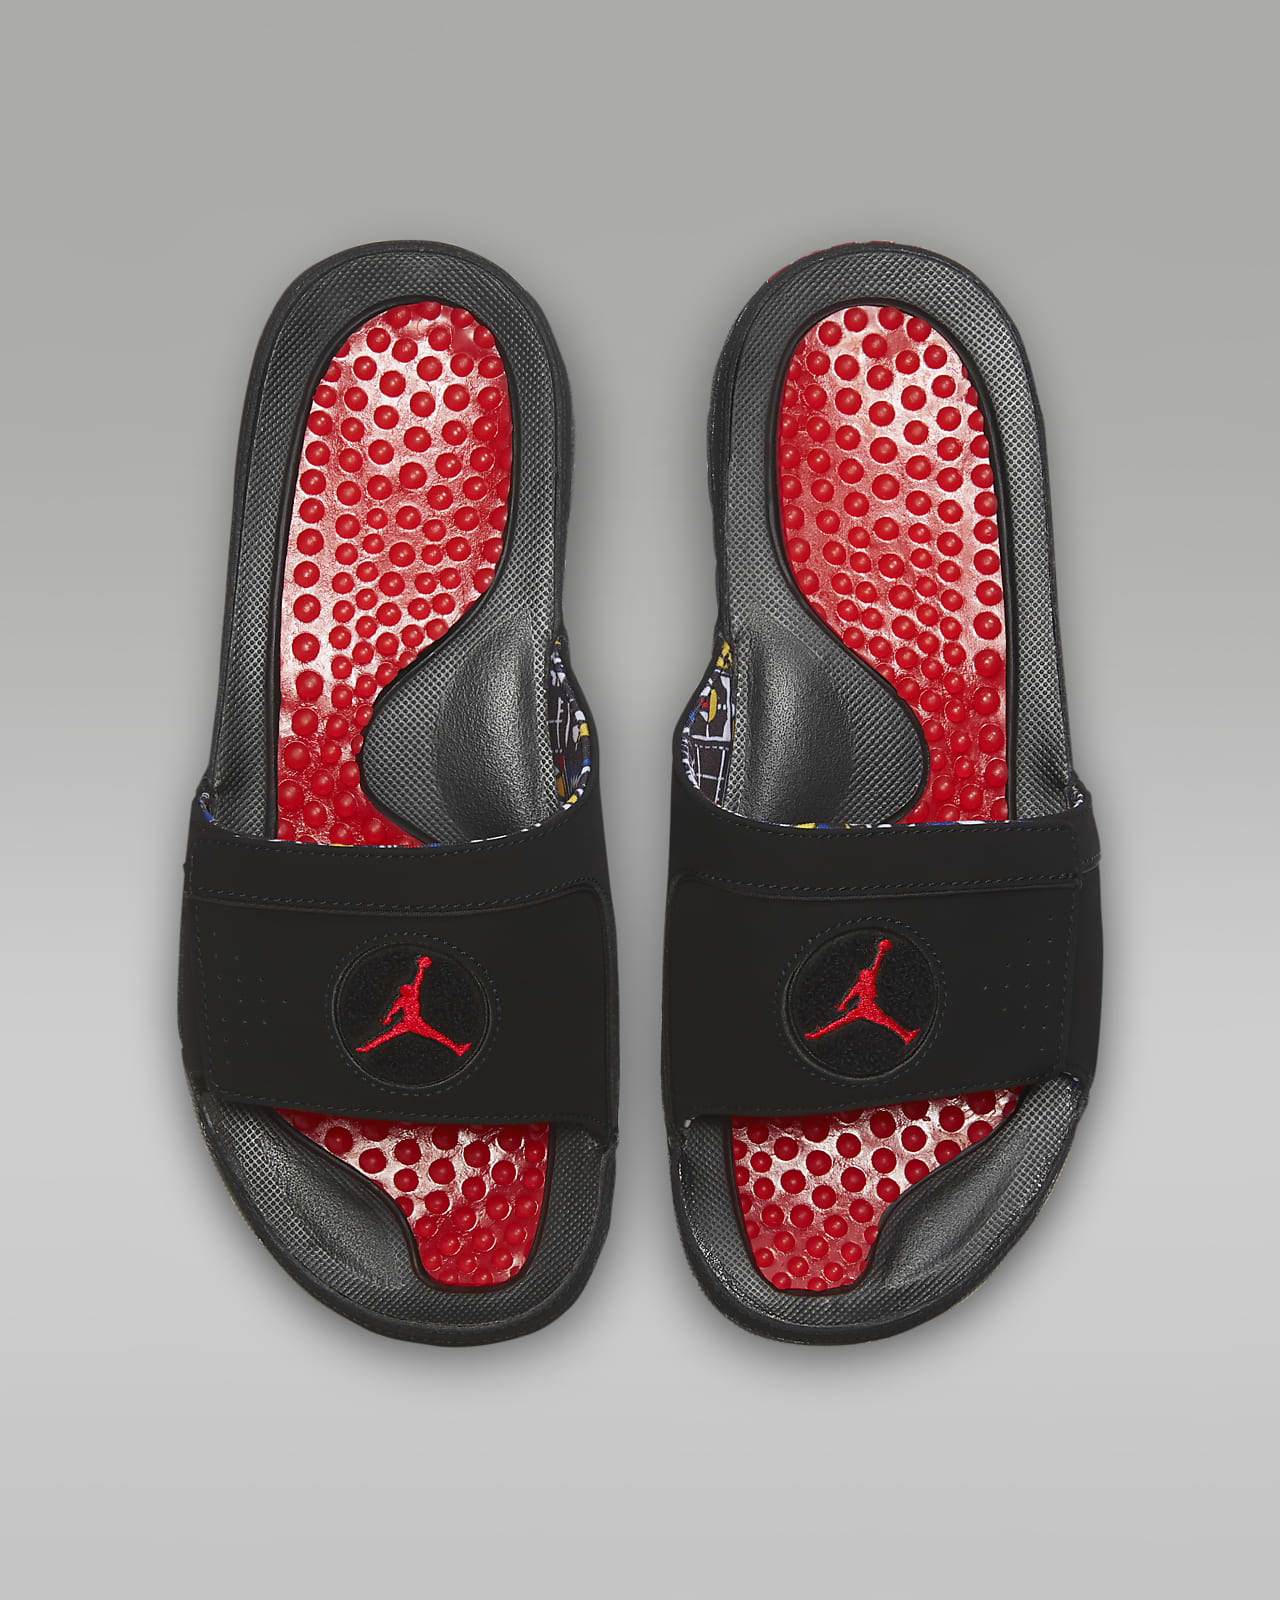 Jordan Release Dates - Gucci custom Air Jordan 12 & 13 by hippie